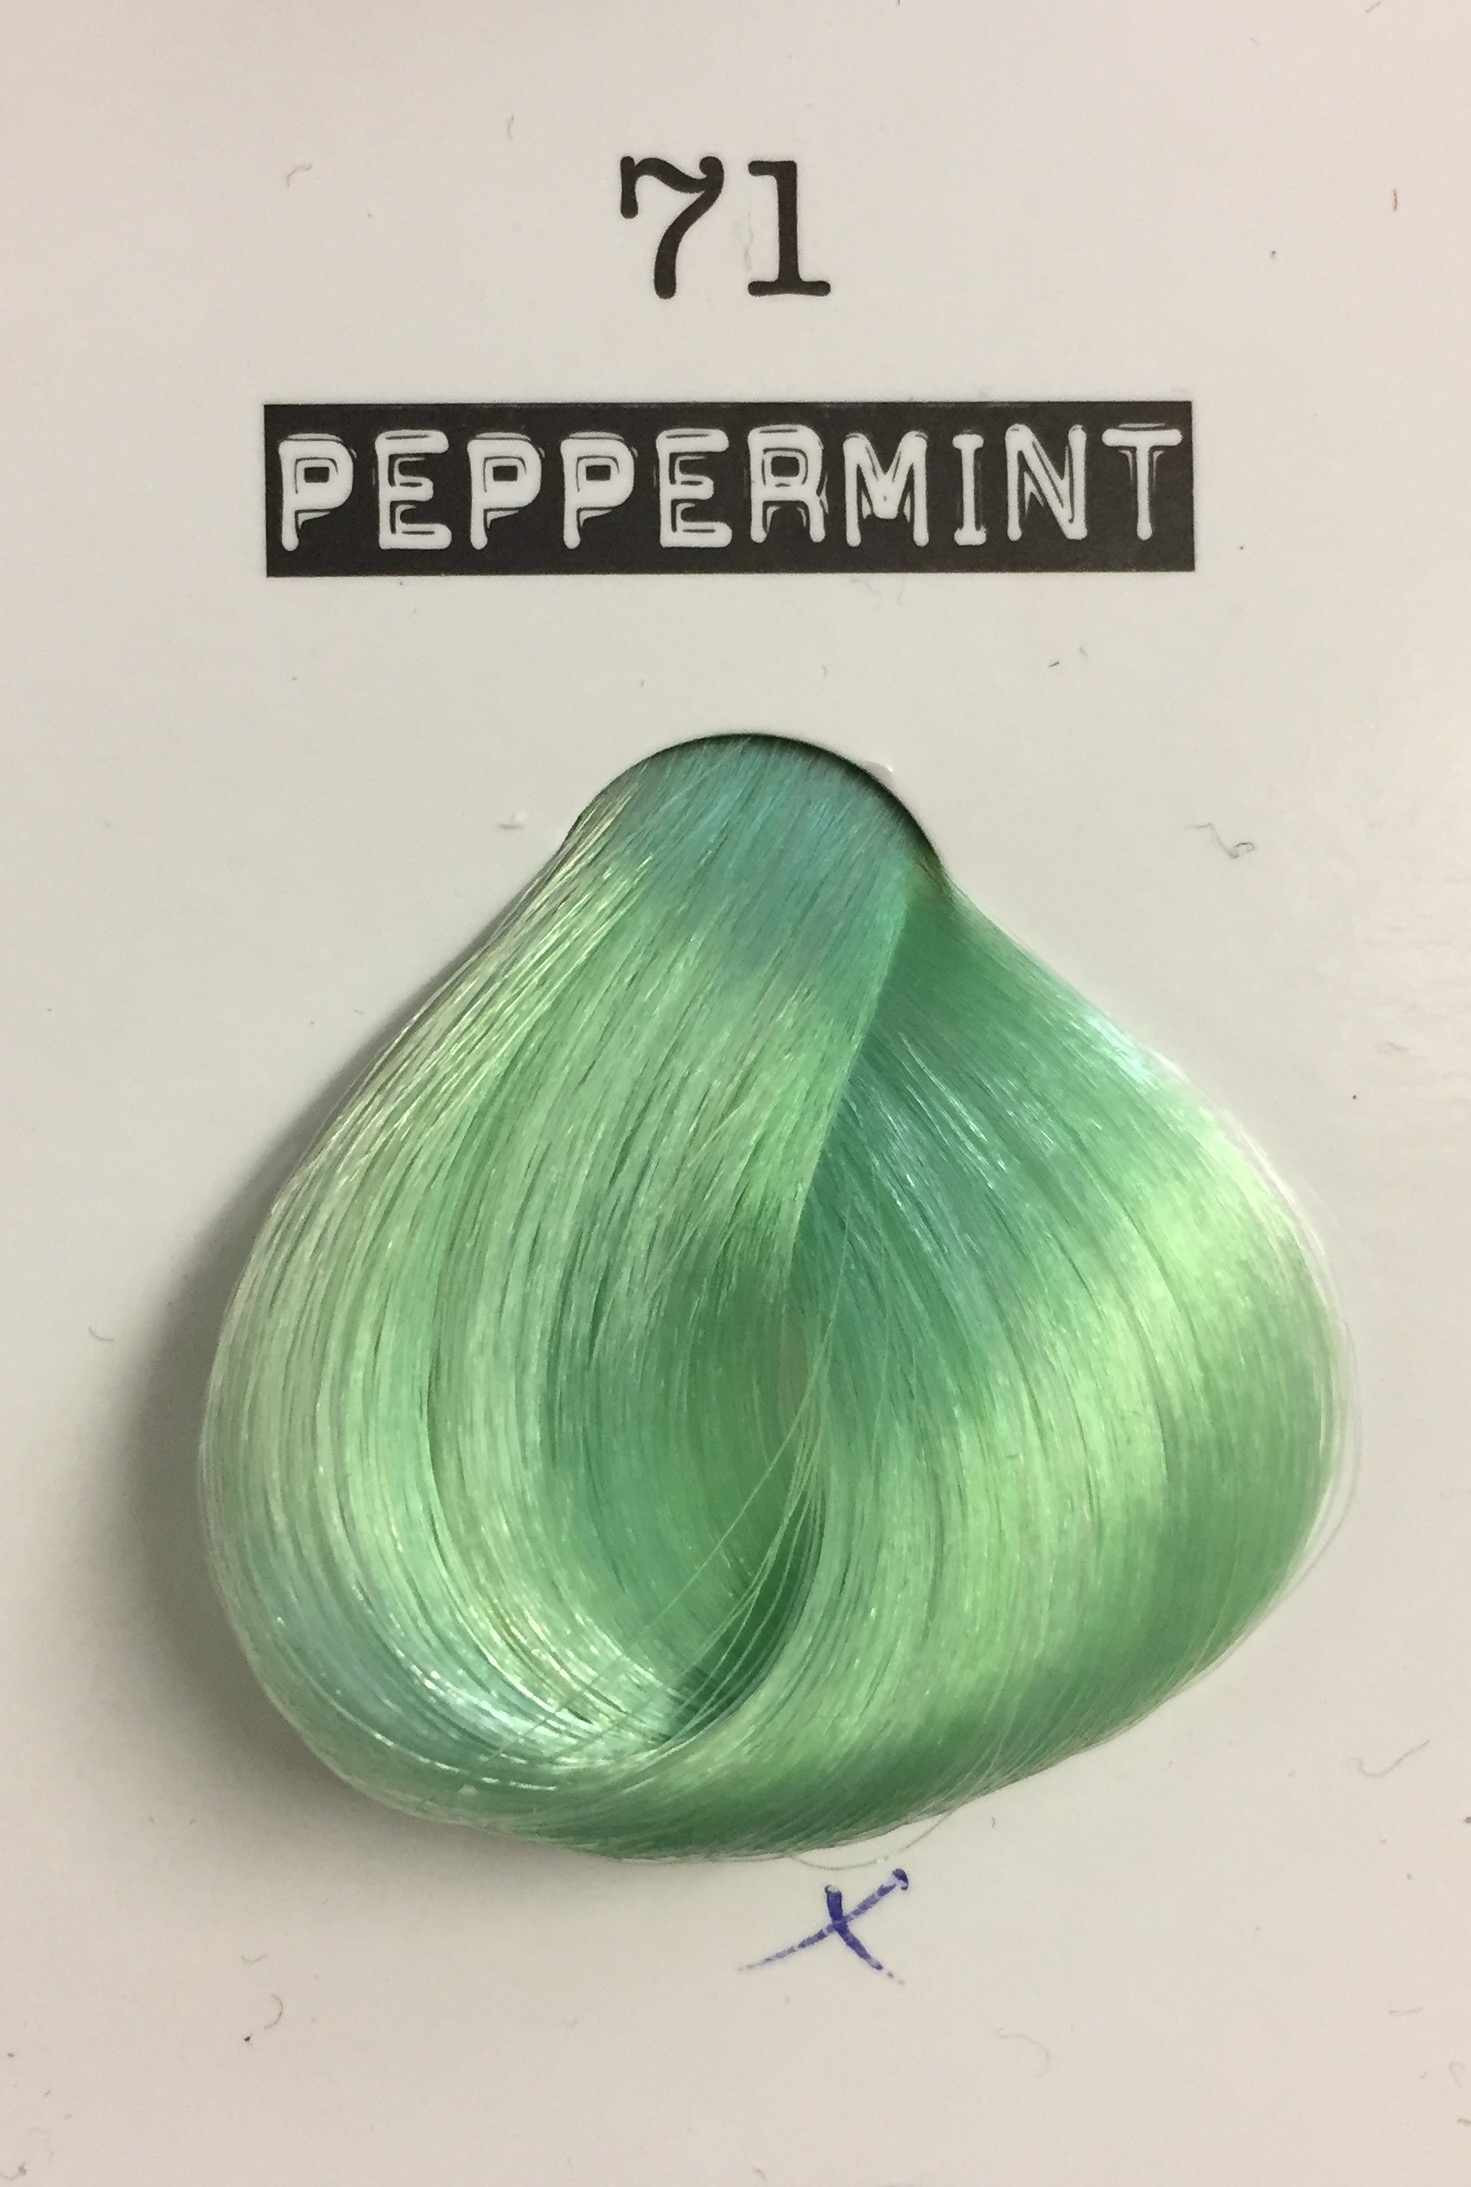 Peppermint no. 71